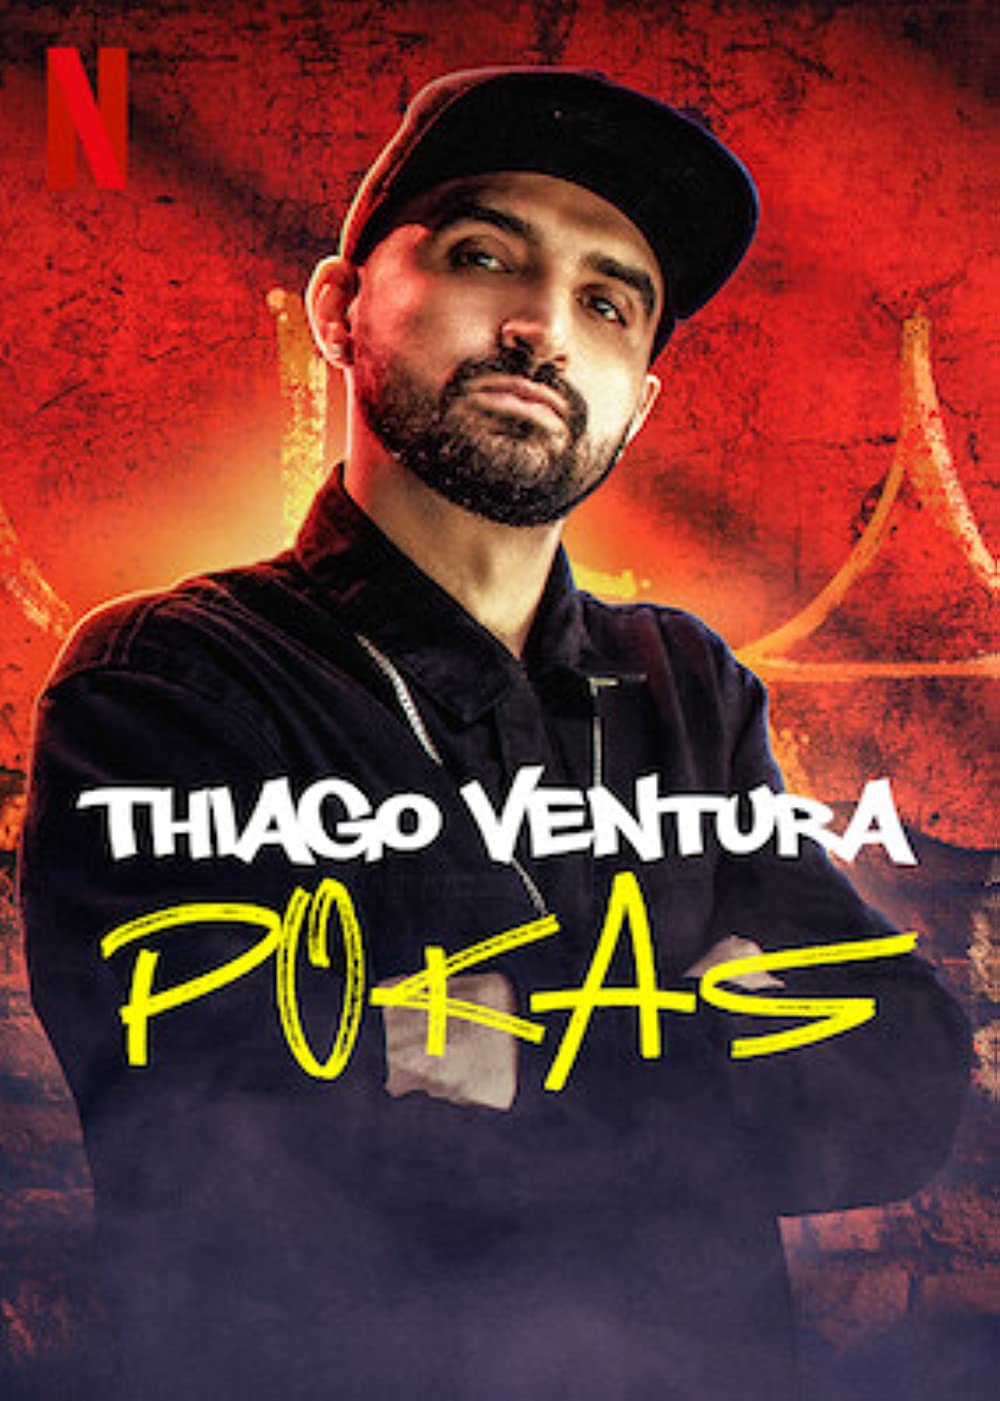 Filmbeschreibung zu Thiago Ventura: Pokas